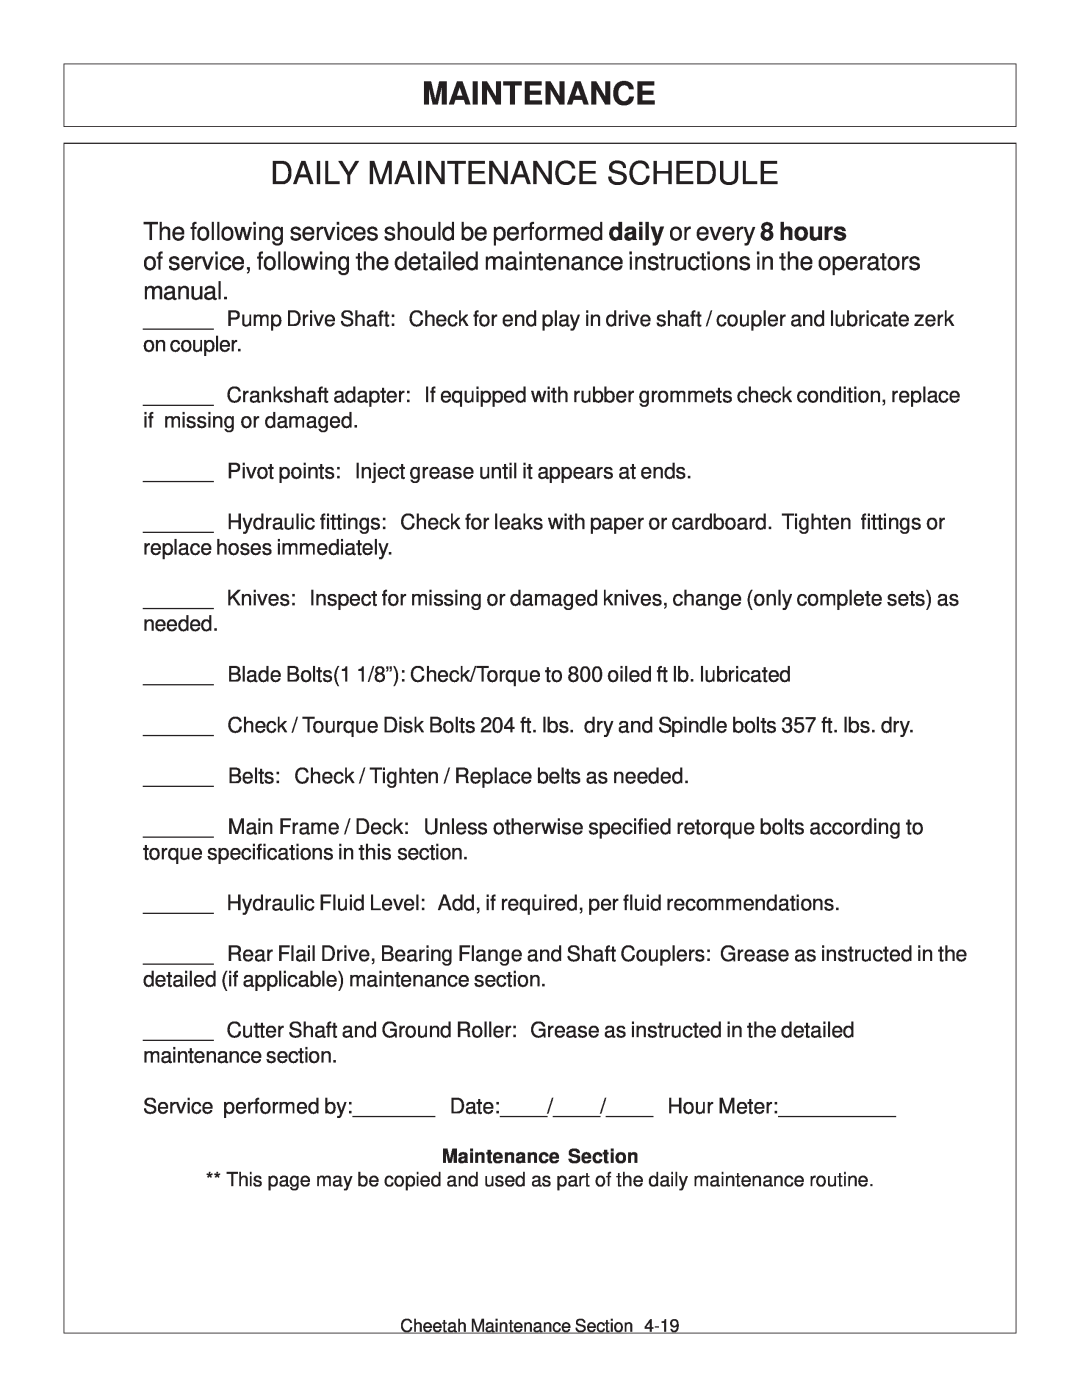 Tiger Products Co., Ltd JD 5083E, JD 5101E, JD 5093E manual Daily Maintenance Schedule 